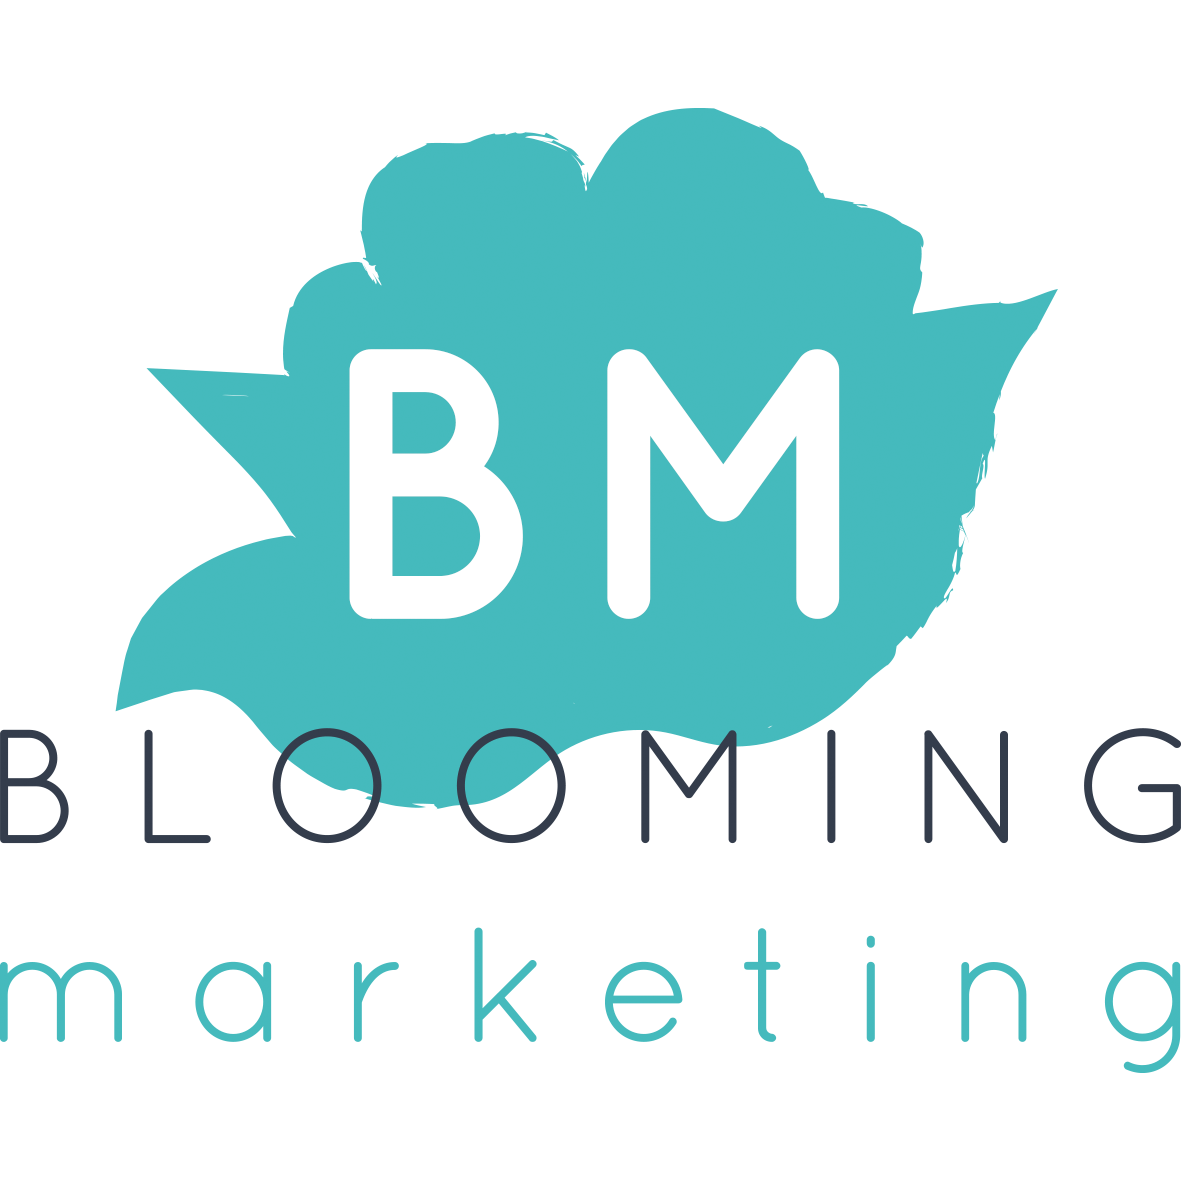 Blooming marketing